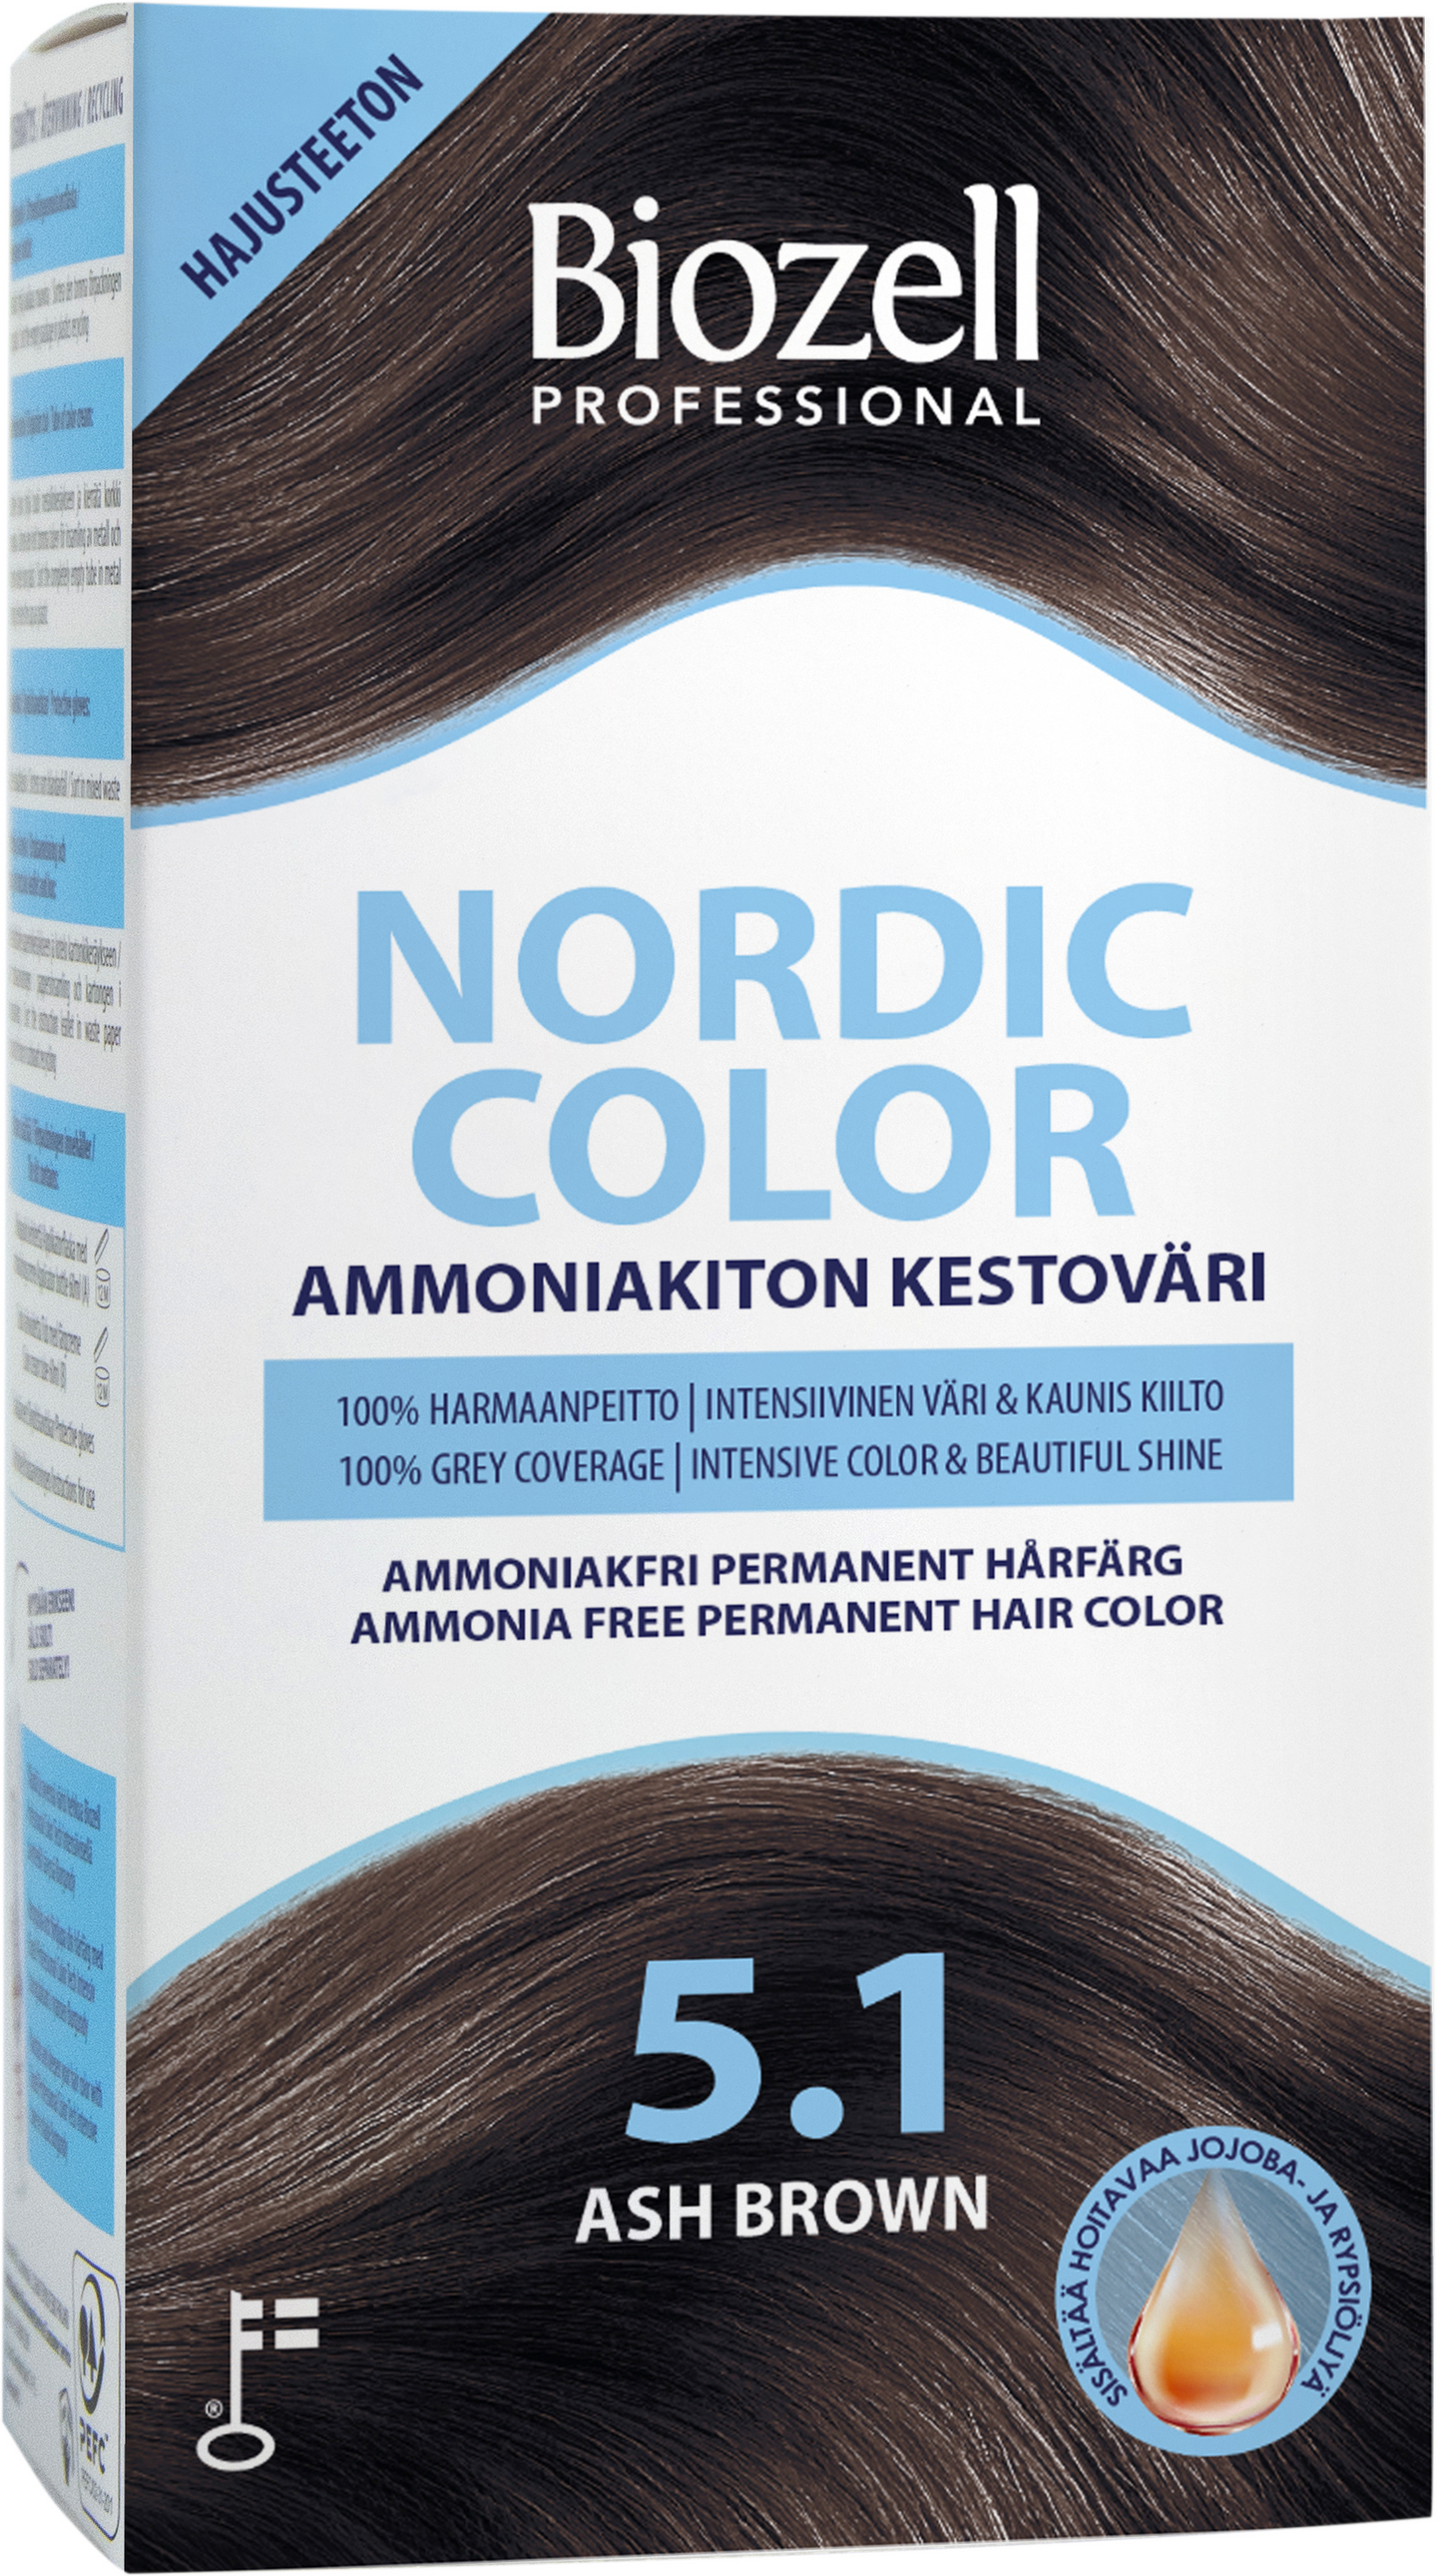 Biozell Professional Nordic Color kestoväri 5.1 2x60ml Ash Brown ammoniakiton